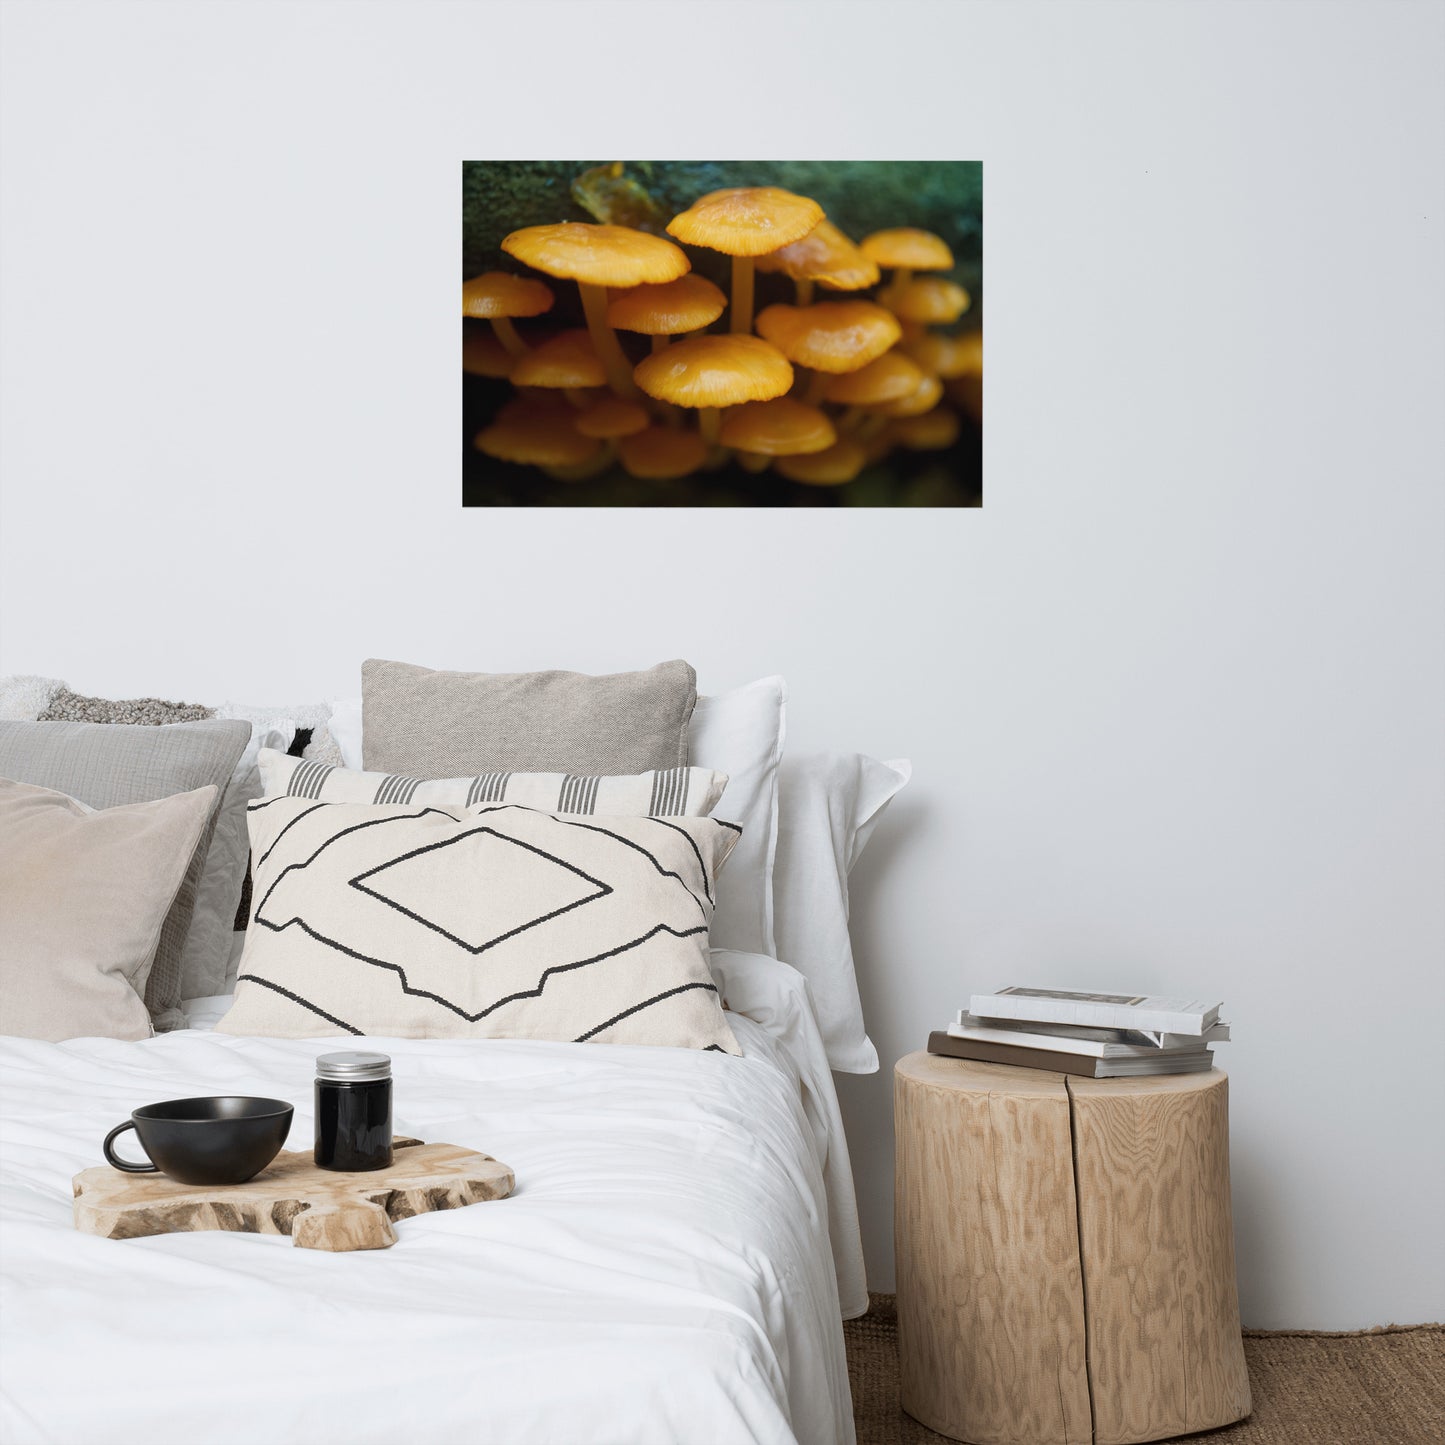 Mushroom Family Botanical Nature Photo Loose Unframed Wall Art Prints